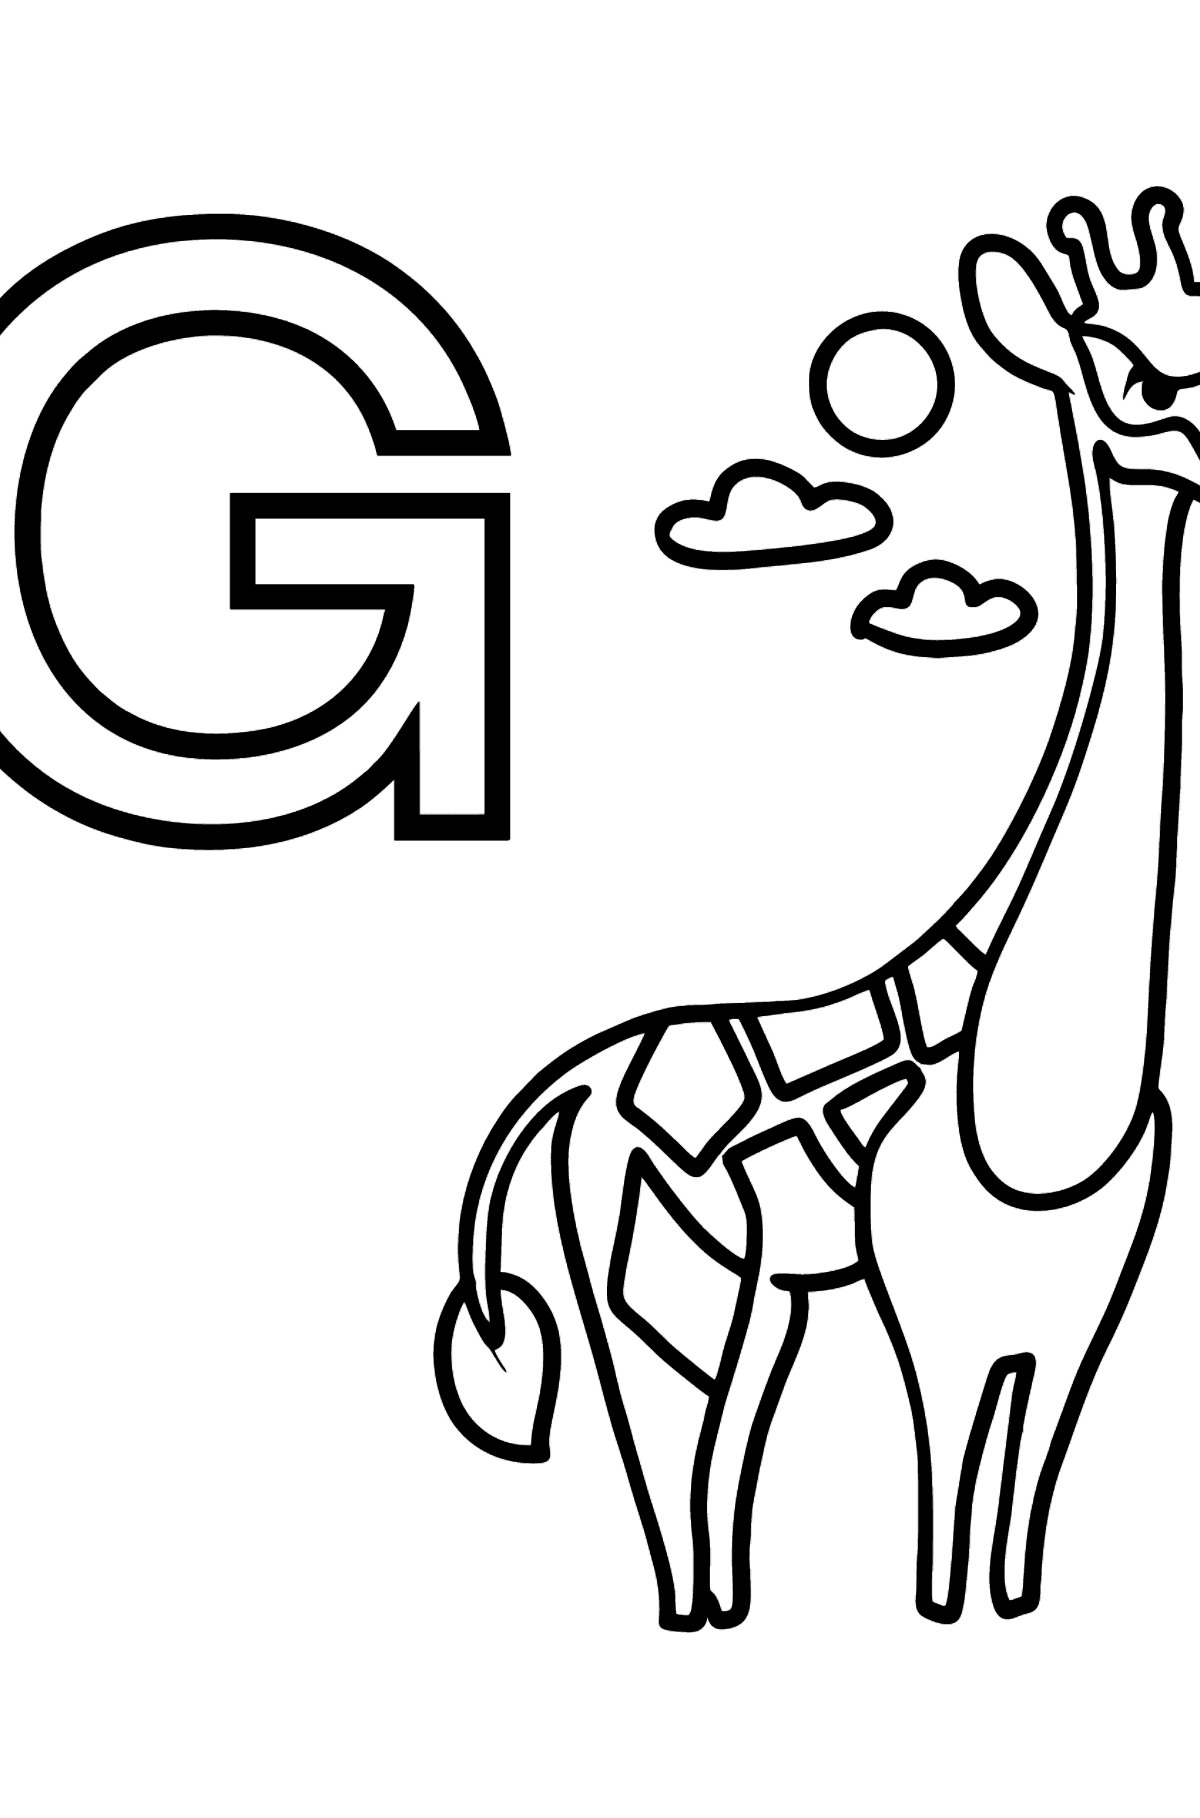 Раскраска Буква G немецкого алфавита - GIRAFFE - Картинки для Детей